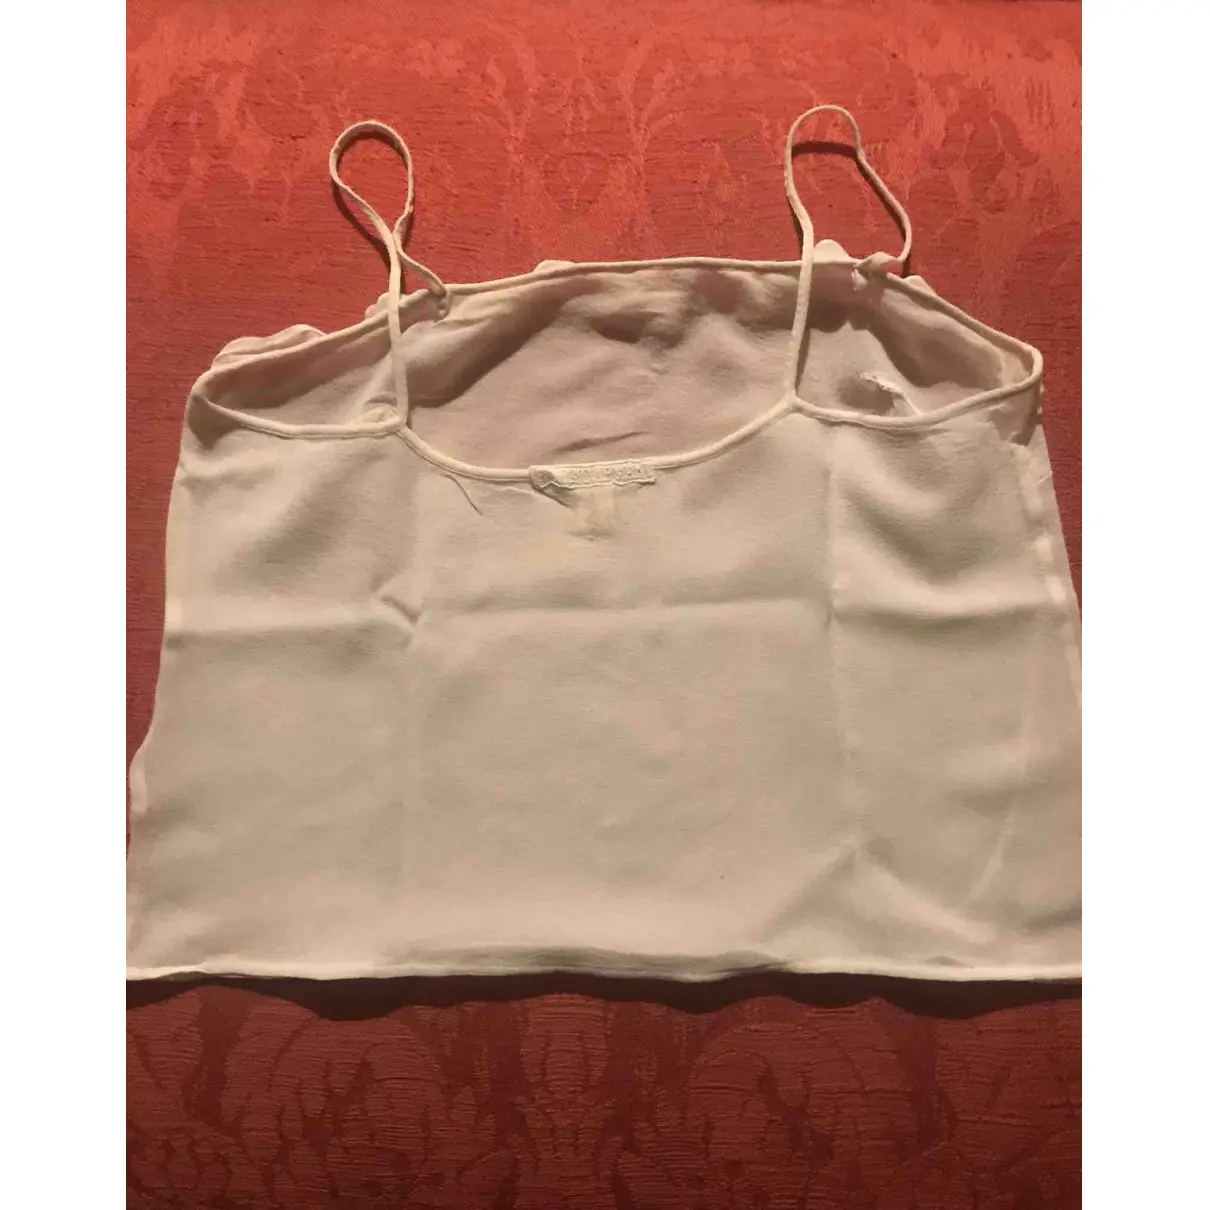 Buy Giorgio Armani Silk lingerie online